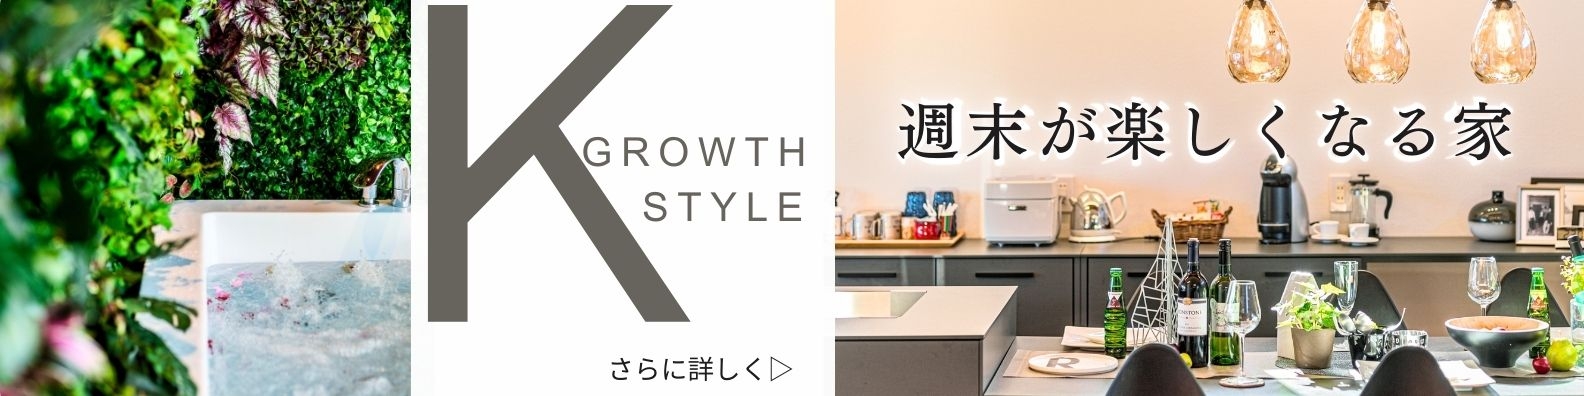 K-Growthバナー